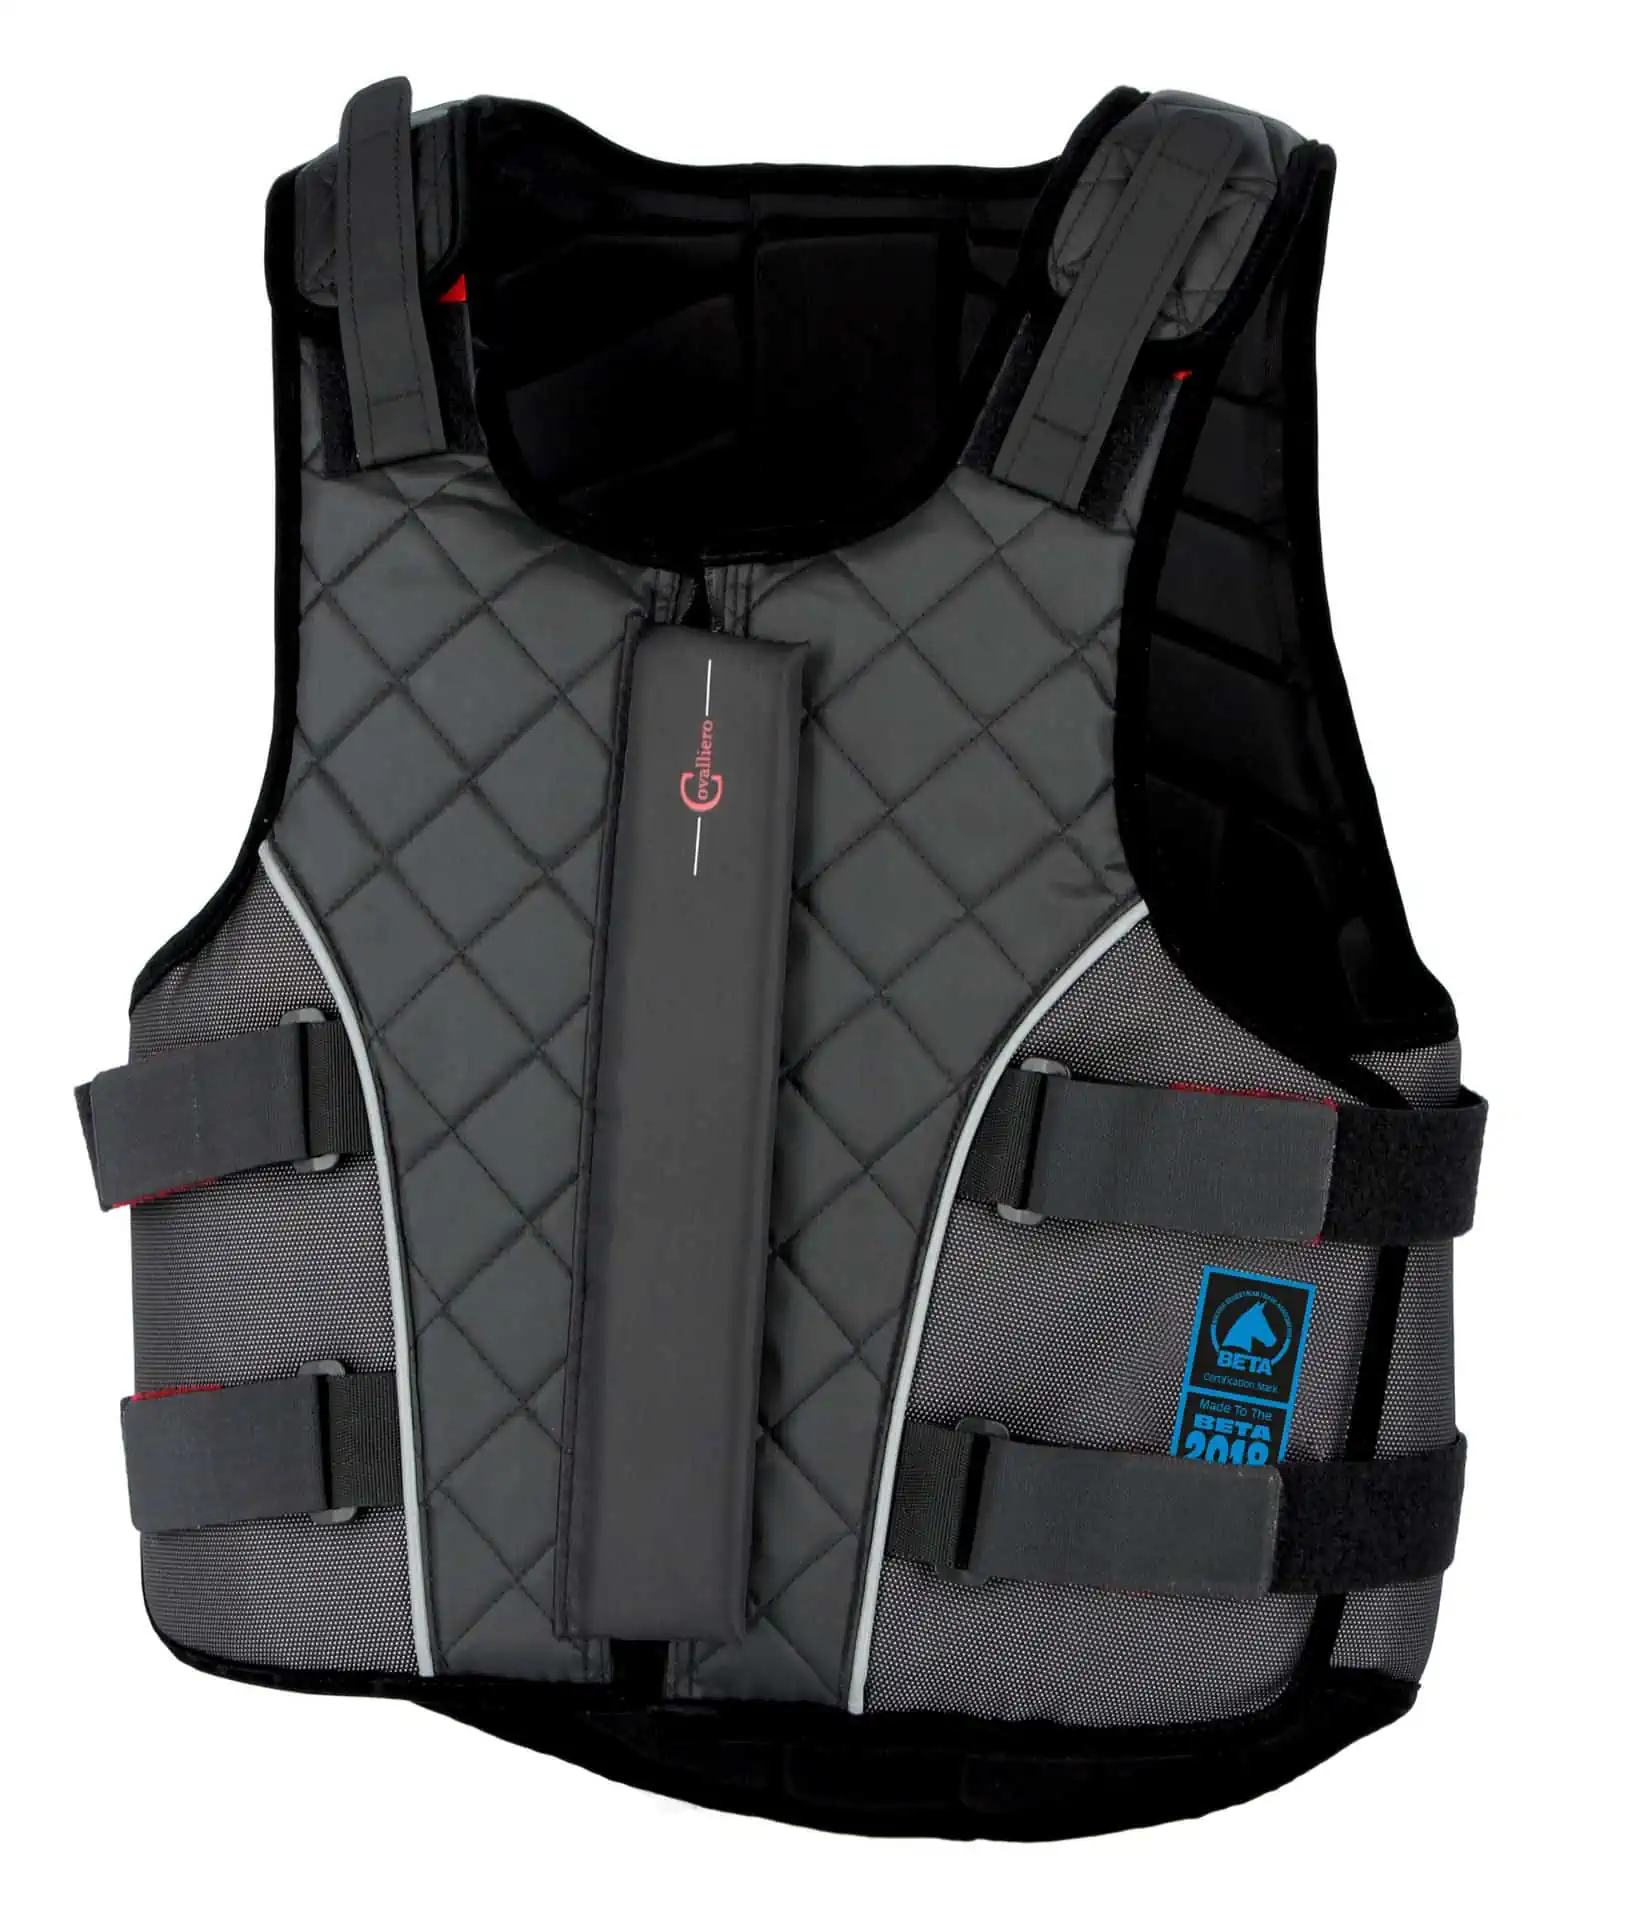 Safety Vest ProtectoFlex 315 Light, Child Size L, BETA